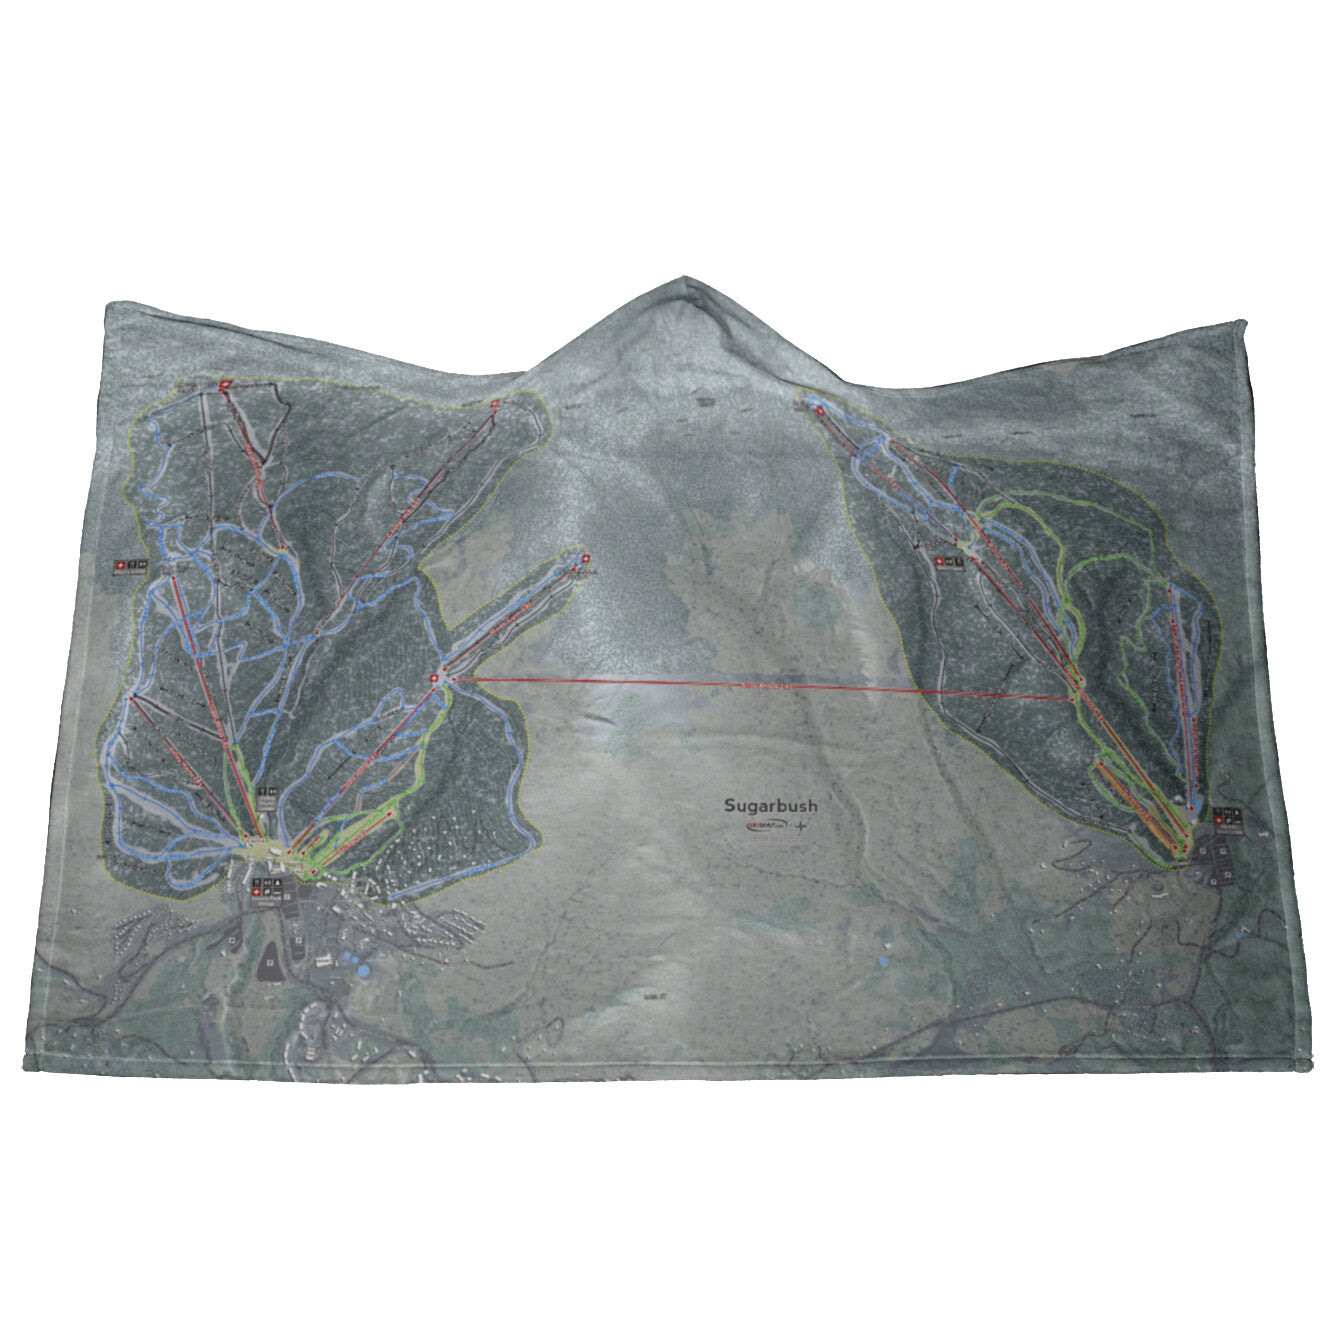 Sugarbush, Vermont Ski Trail Map - Hooded Blanket - Powderaddicts